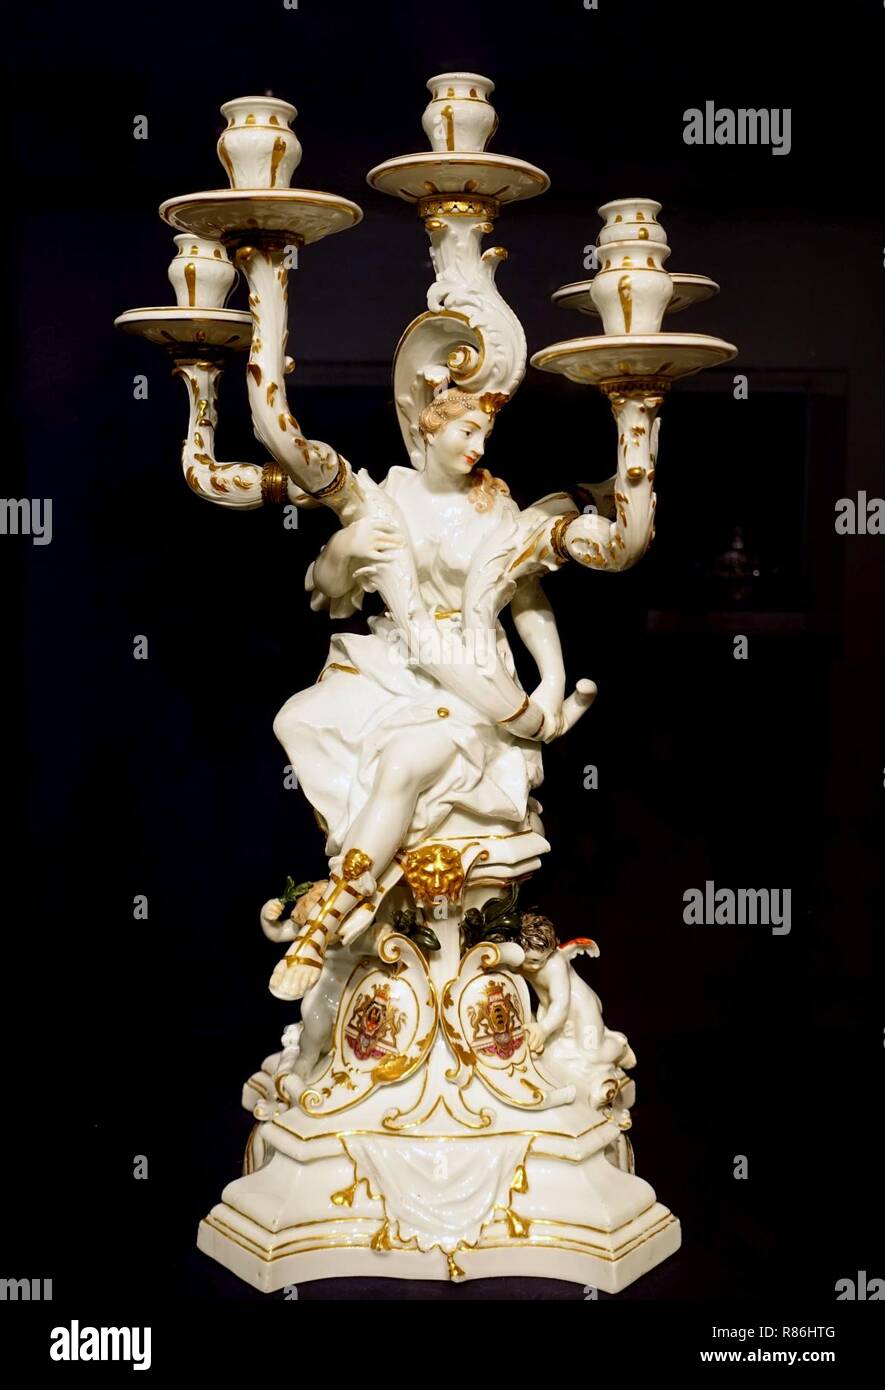 Candelabro per il servizio Sulkowsky, Johann Joachim Kandler modeler, Meissen fabbrica di porcellana di Meissen, Germania, 1736, porcellana - Foto Stock